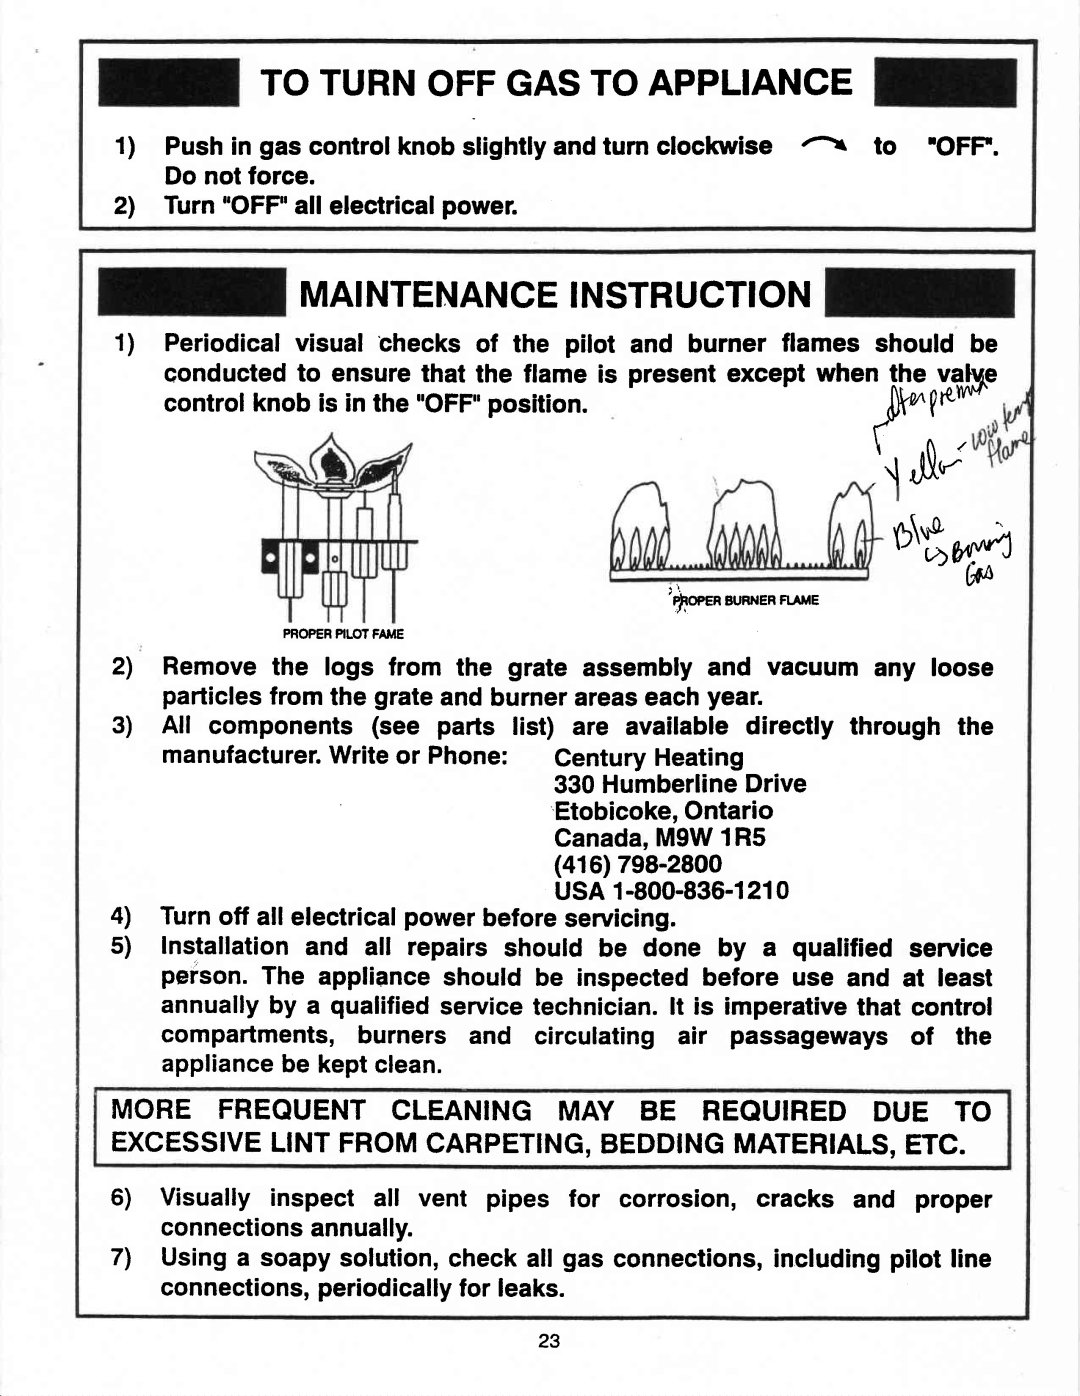 Vermont Casting G600 manual t5\$w, 0trrt, Toturnoffgastoappliance, Maintenanceinstruction, controlknobis in the, position 